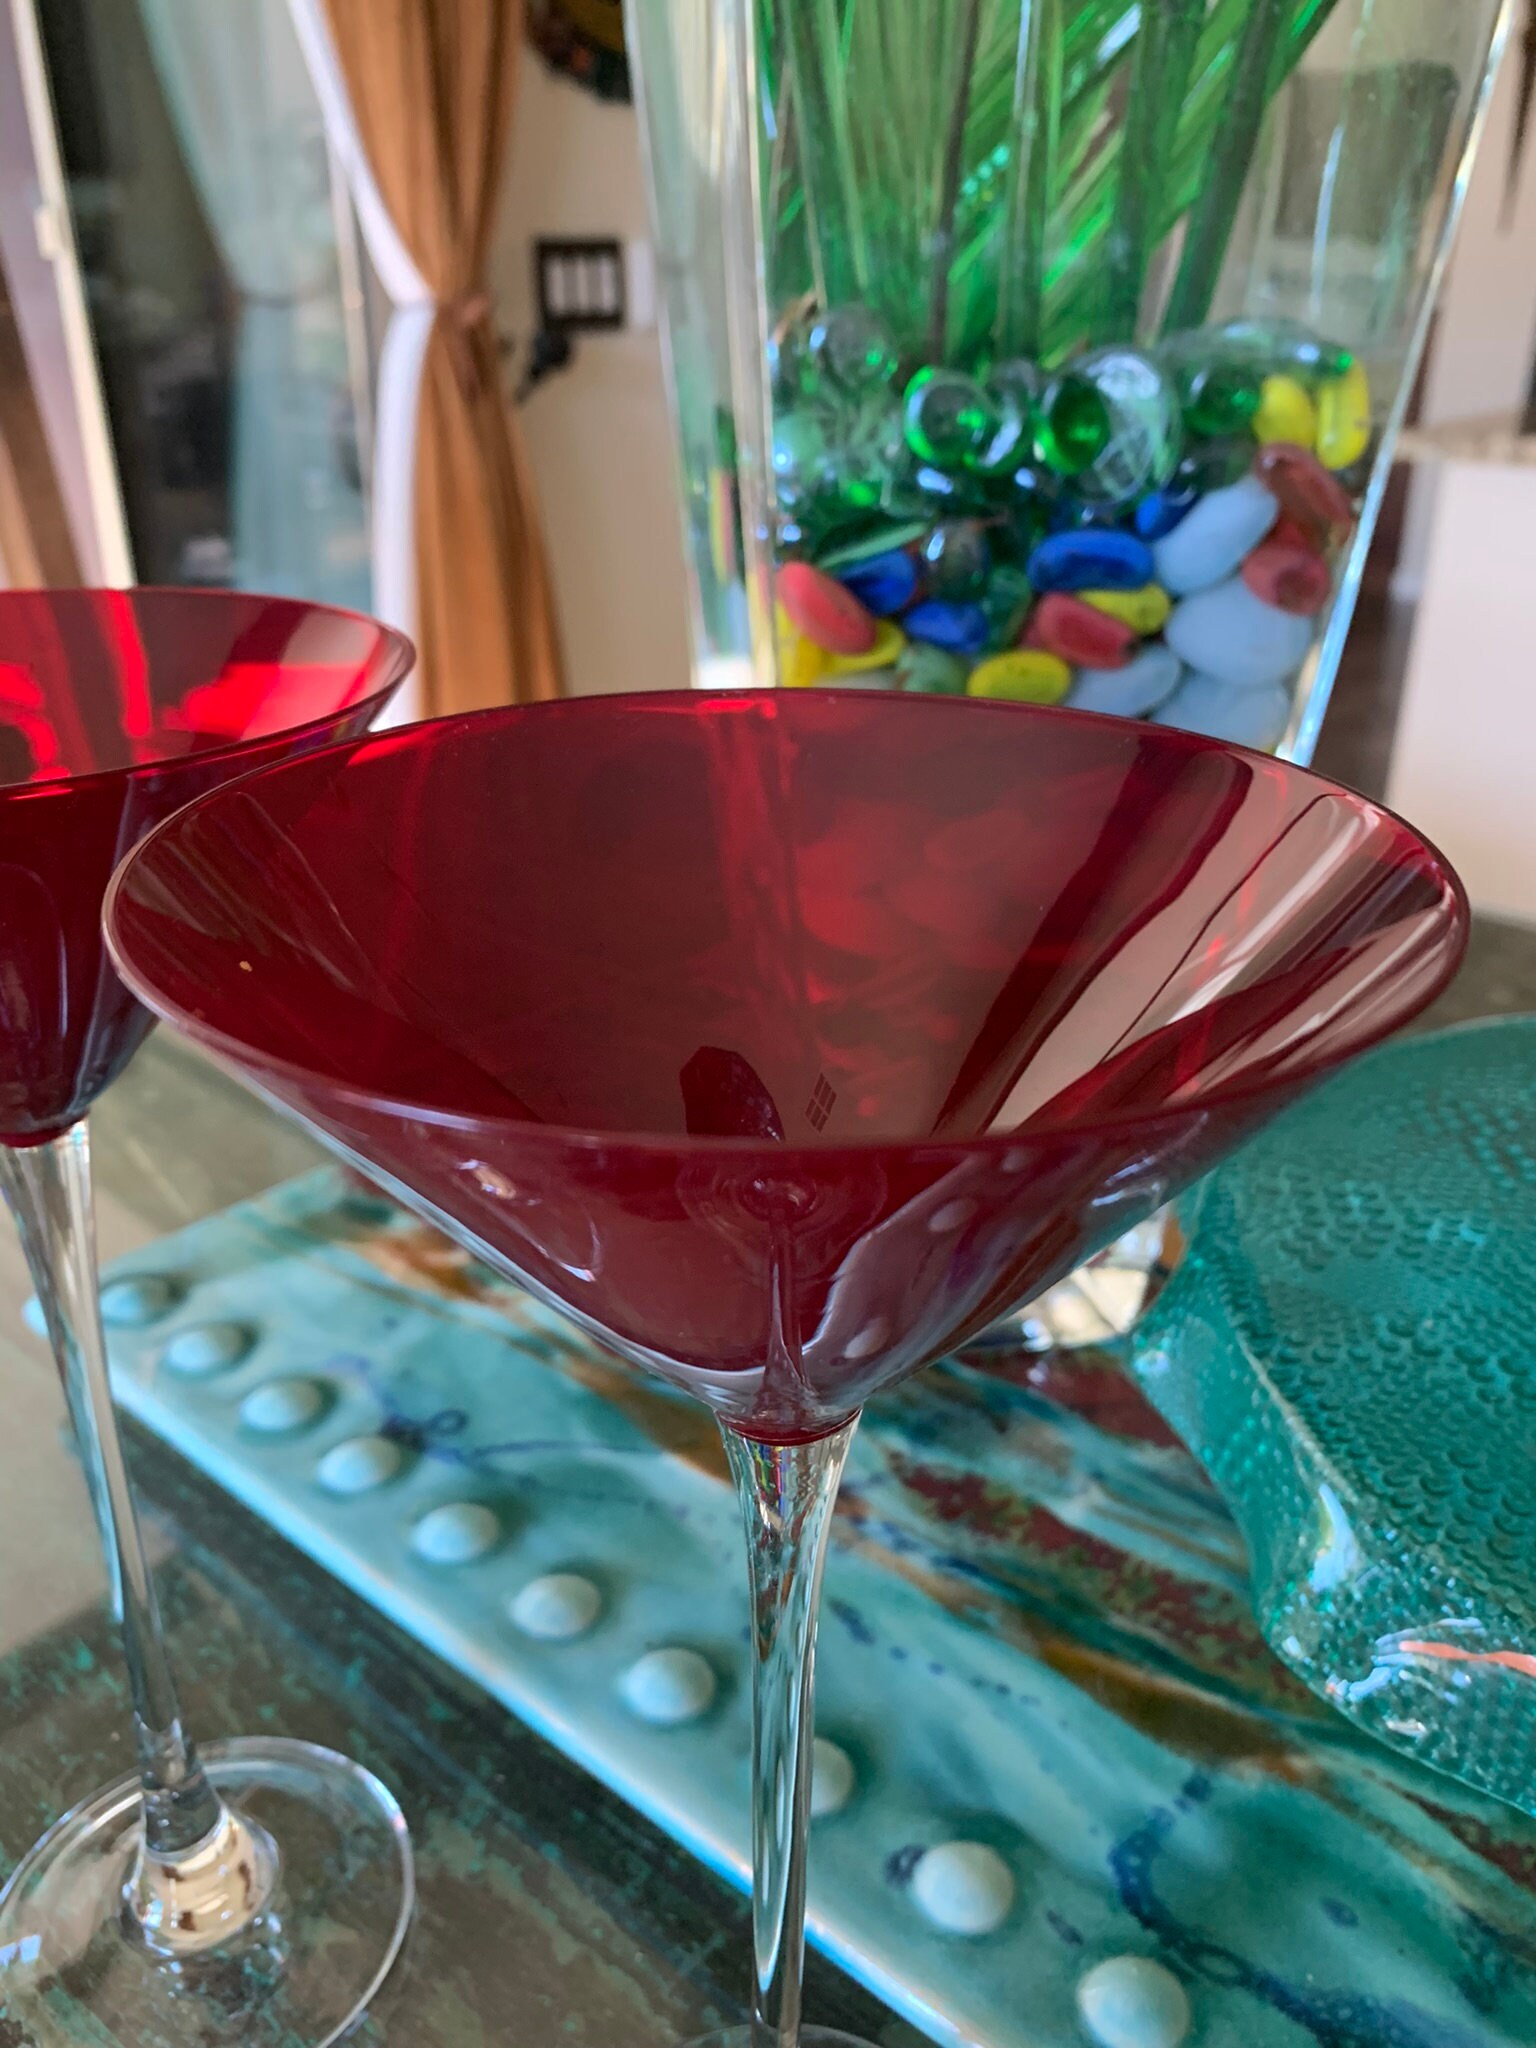 Plastic Red Stem Mini Martini Glass